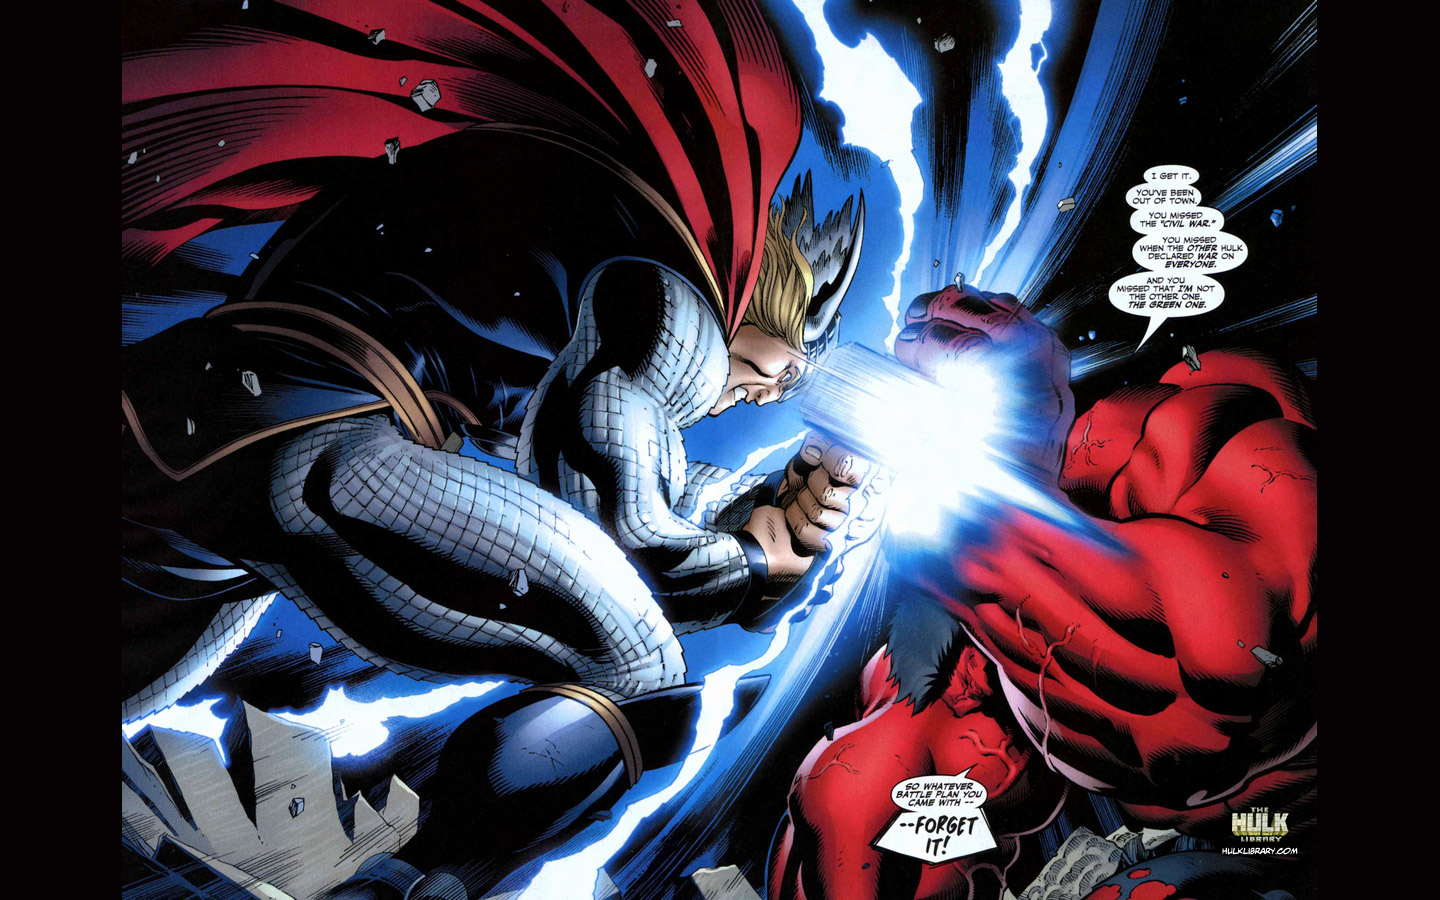 Super Sonic (Sonic X) vs The Ginyu Force - Battles - Comic Vine